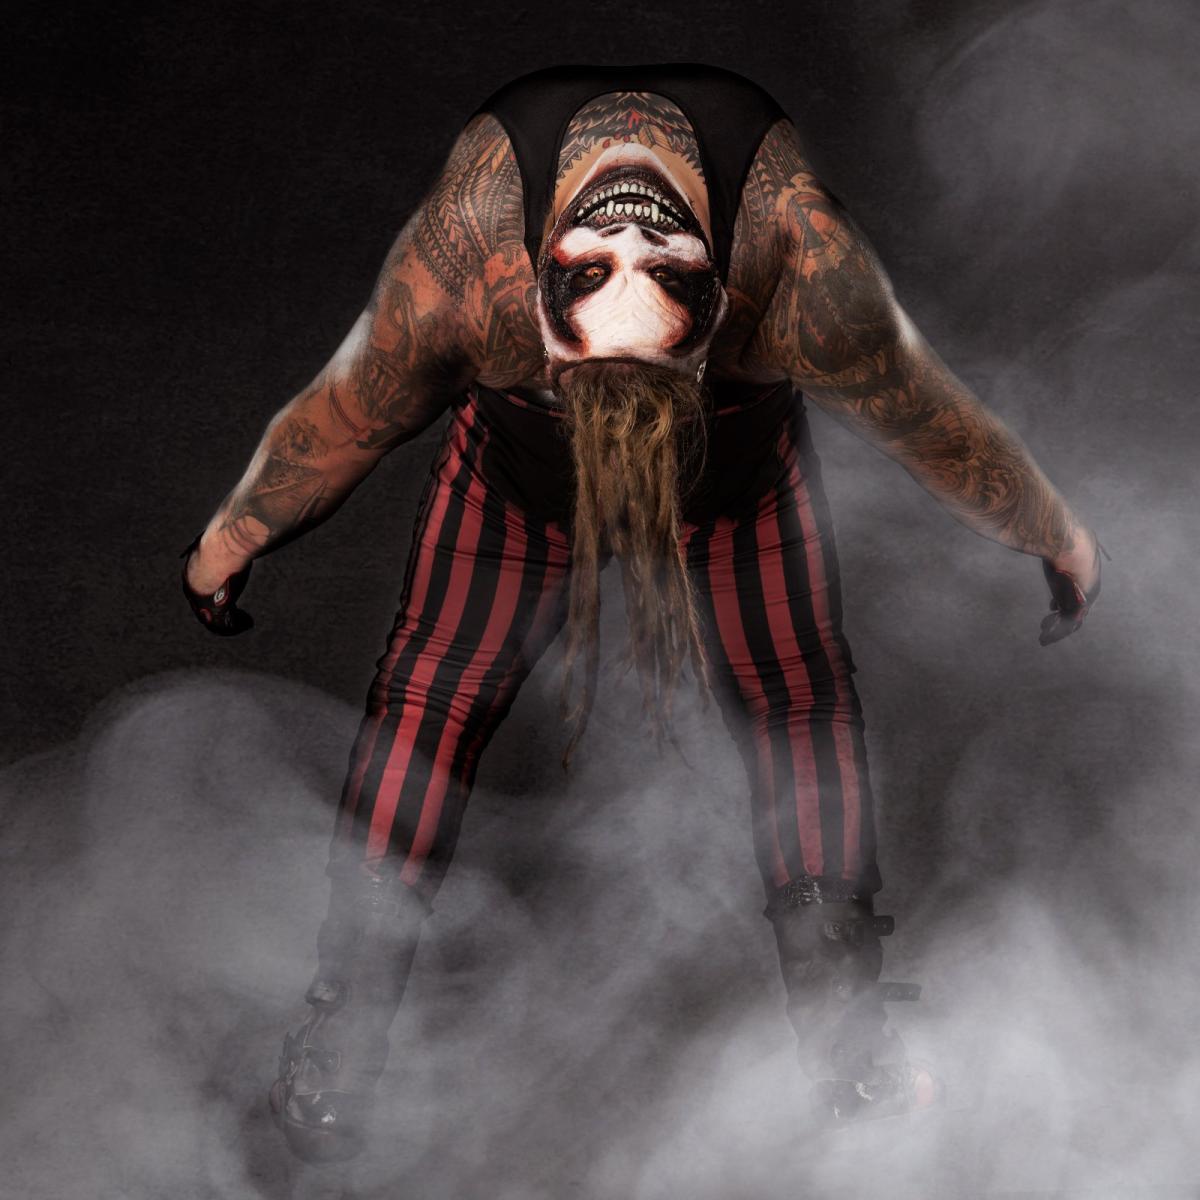 Bray Wyatt becomes The Fiend: photo